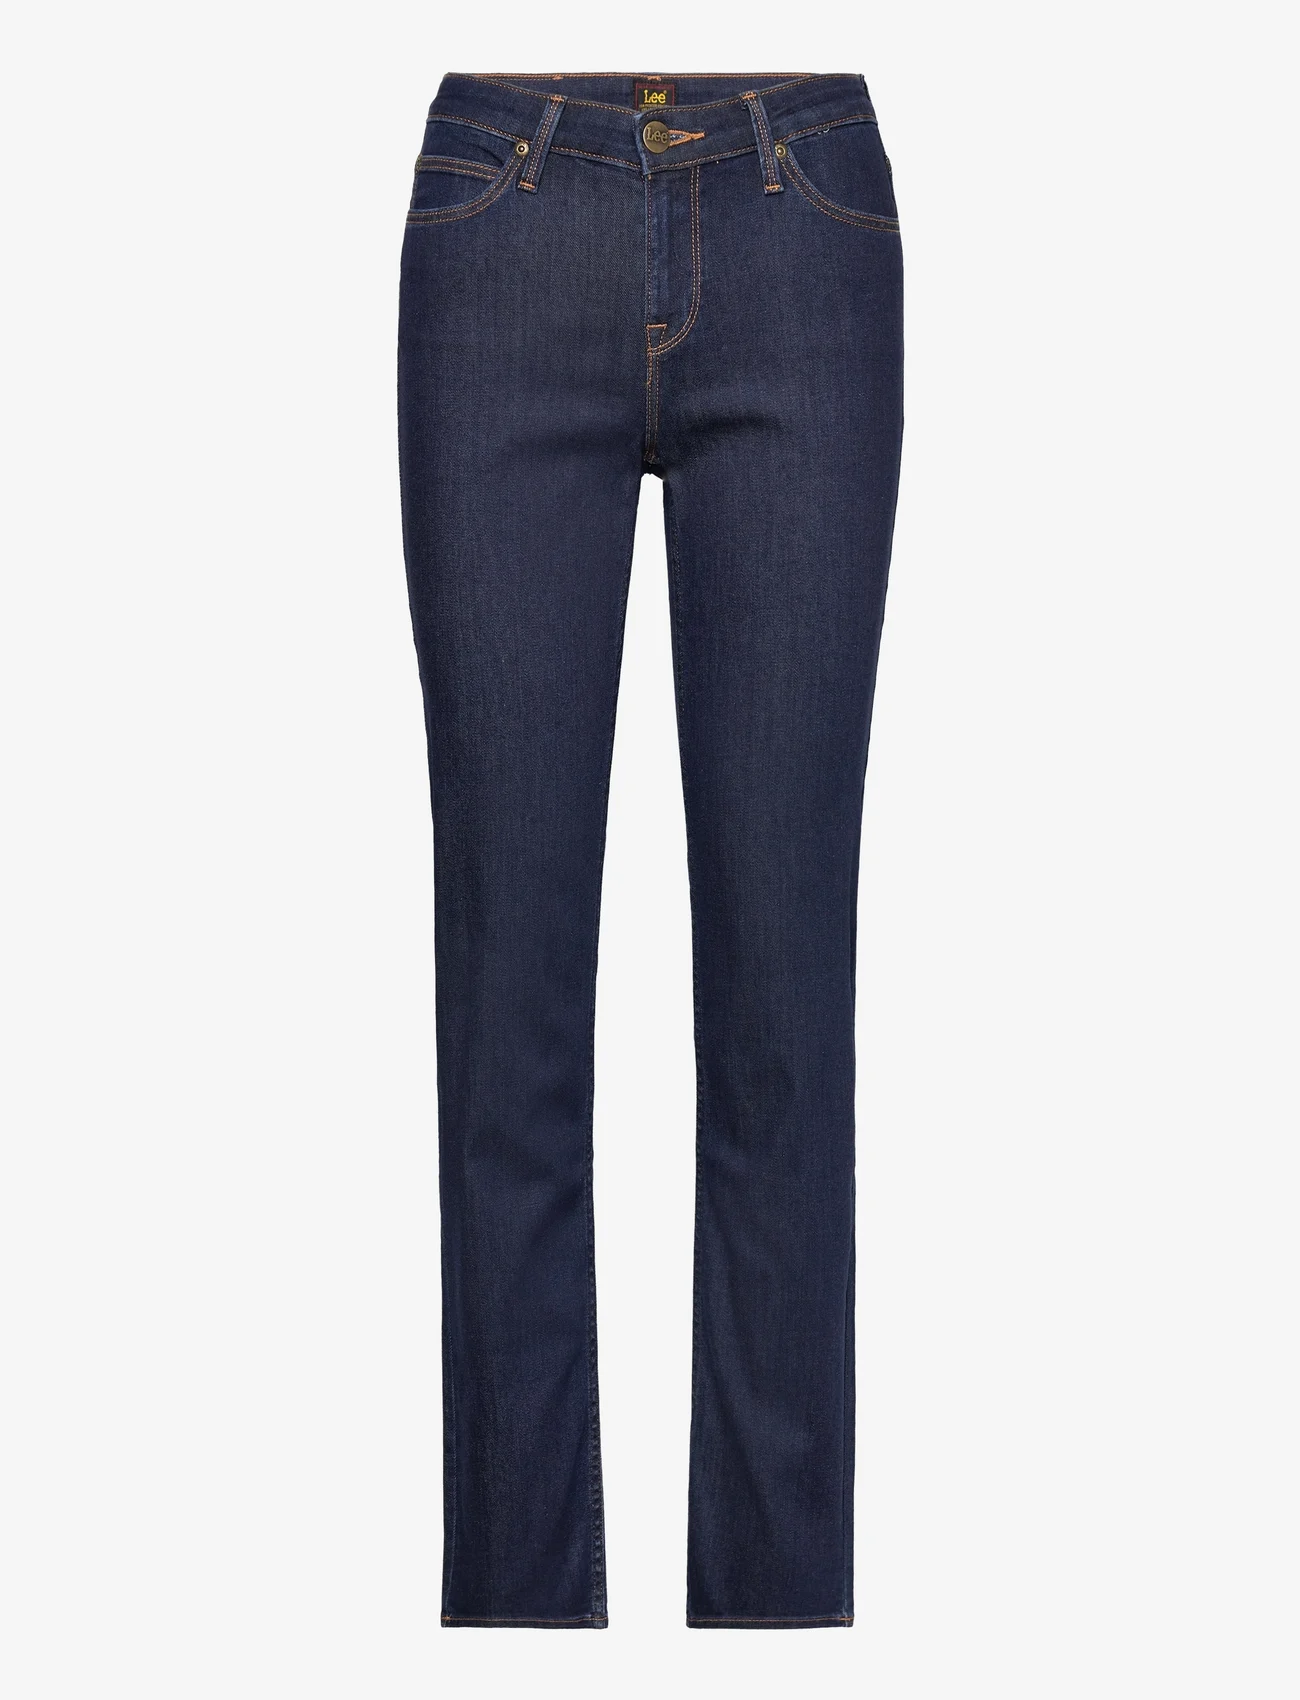 Lee Jeans - MARION STRAIGHT - suorat farkut - solid blue - 0